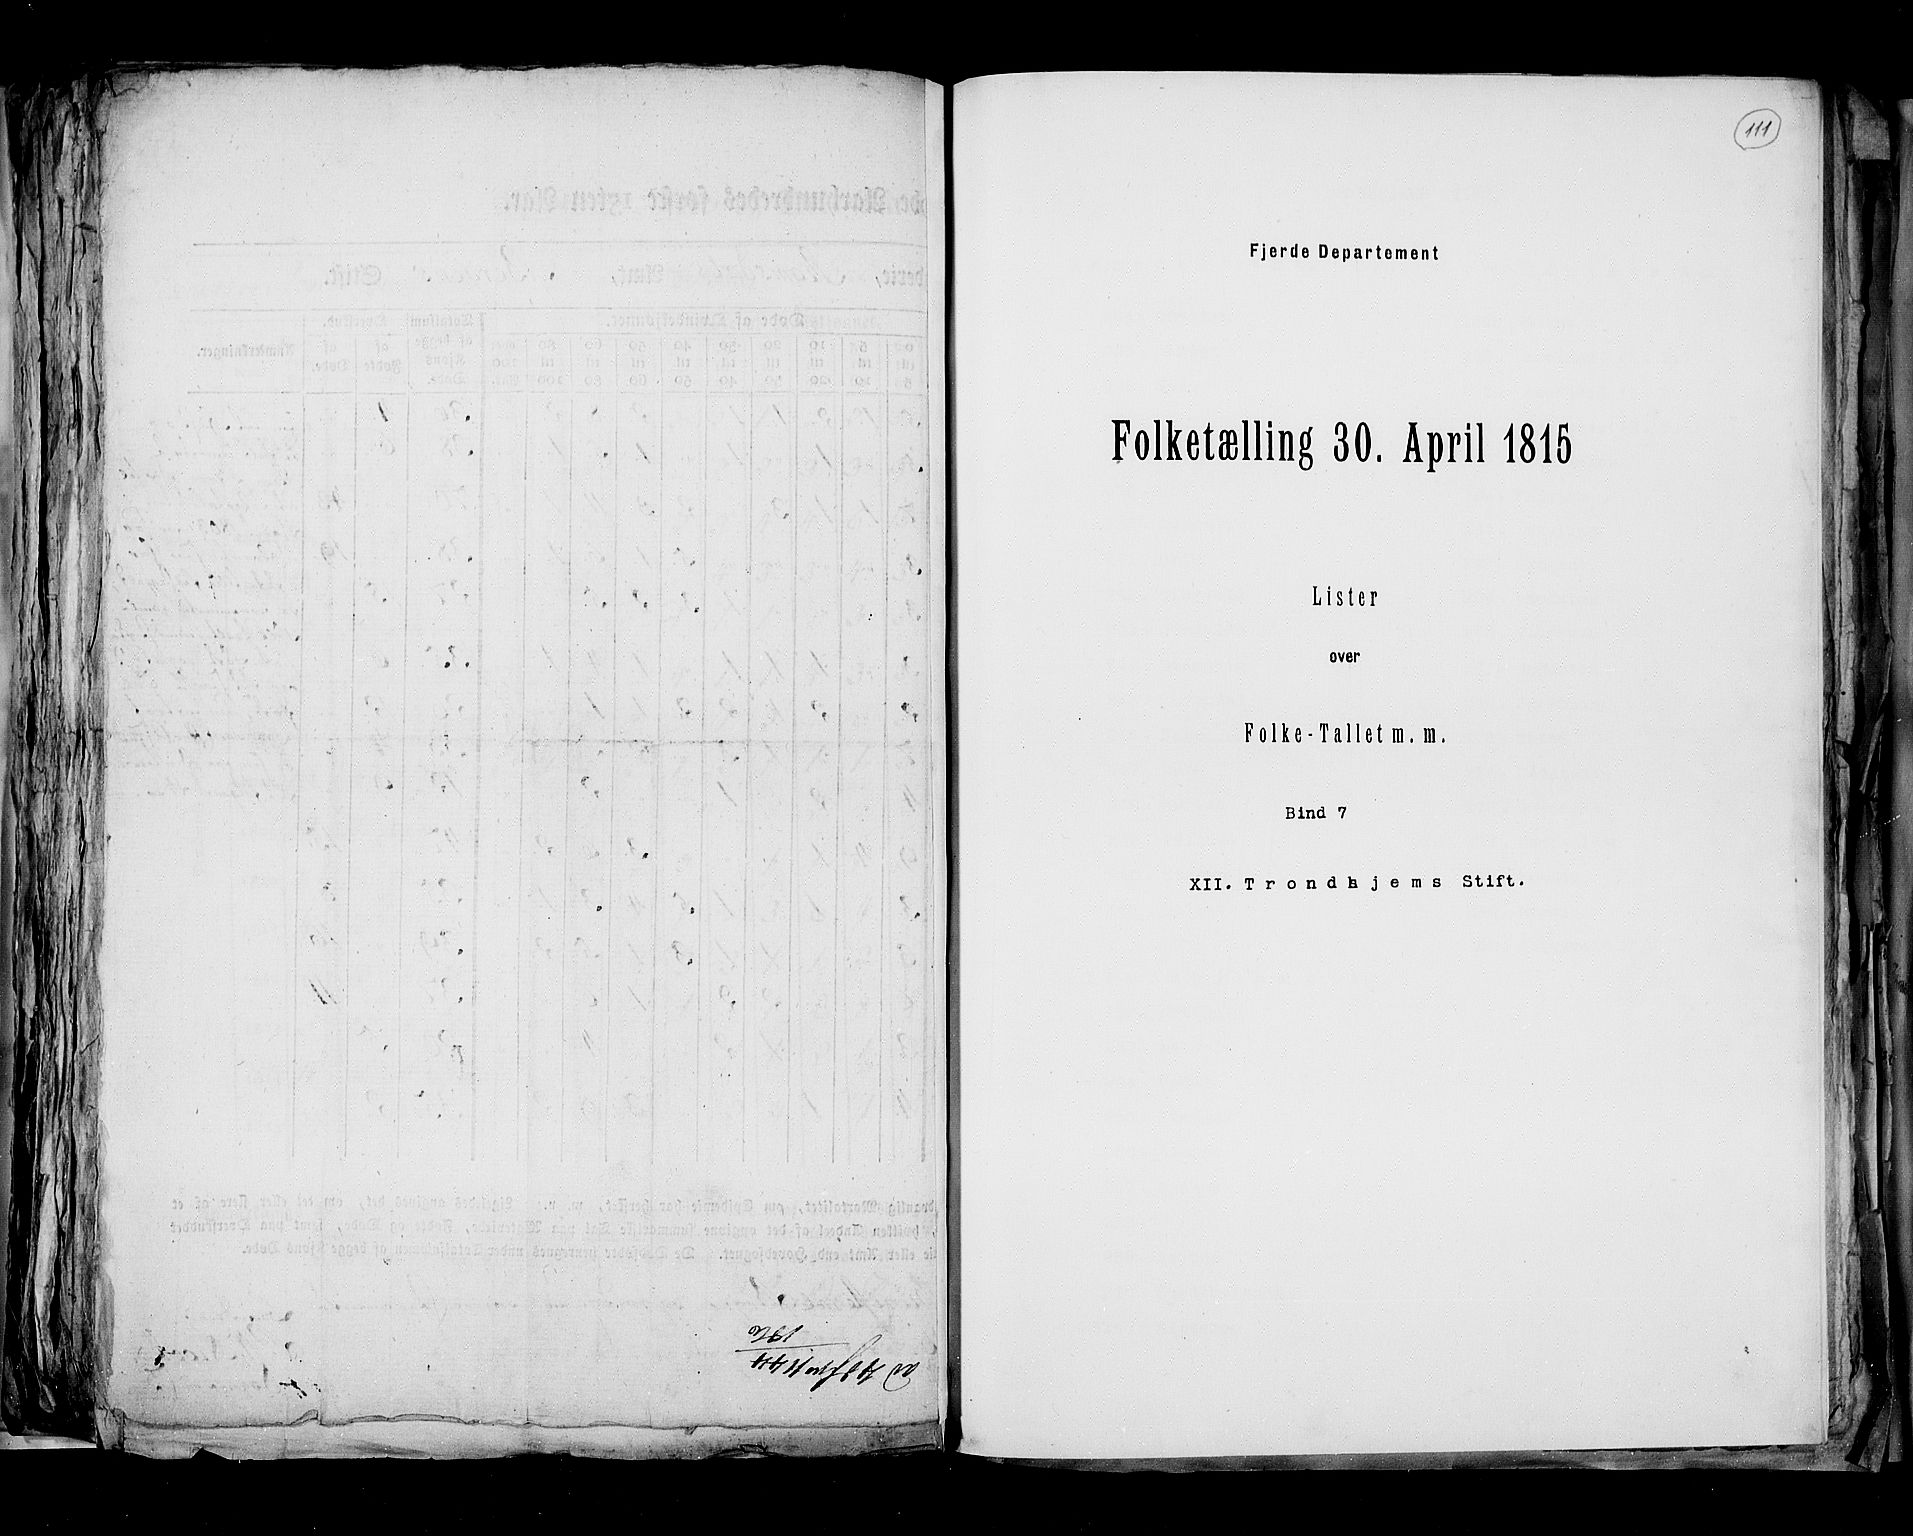 RA, Folketellingen 1815, bind 7: Folkemengdens bevegelse i Bergen stift og Trondheim stift, 1815, s. 111